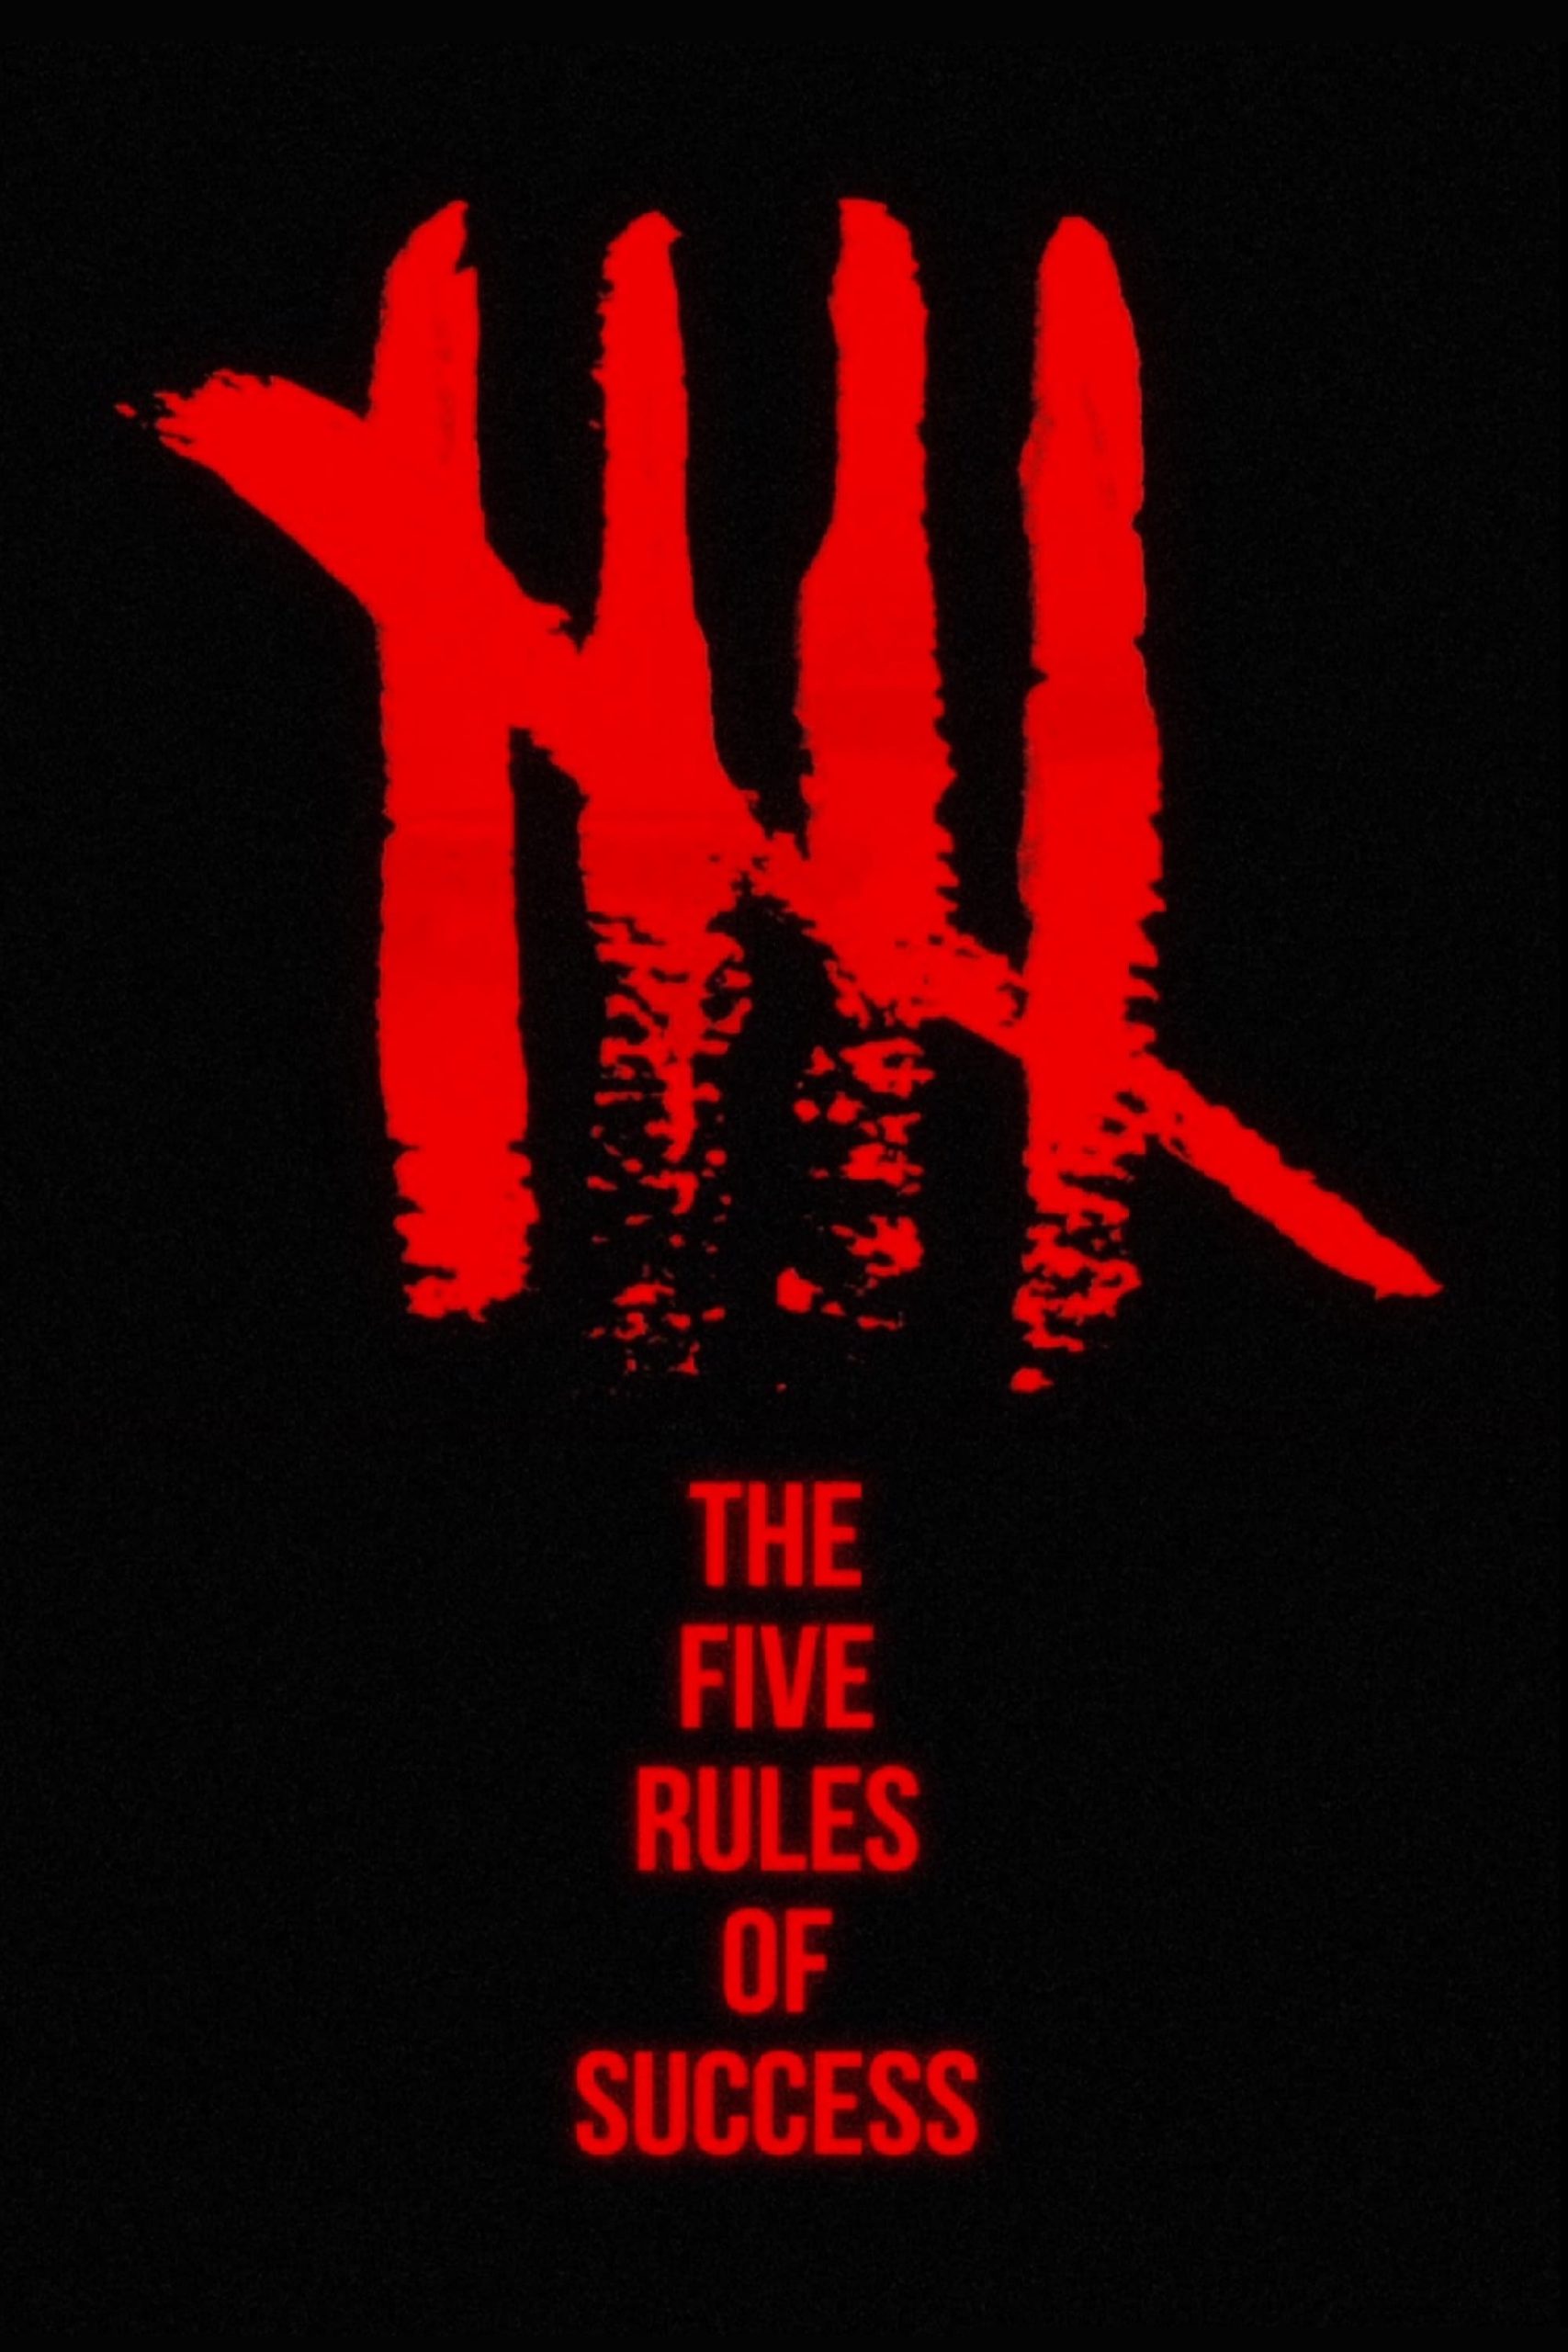 Five rules